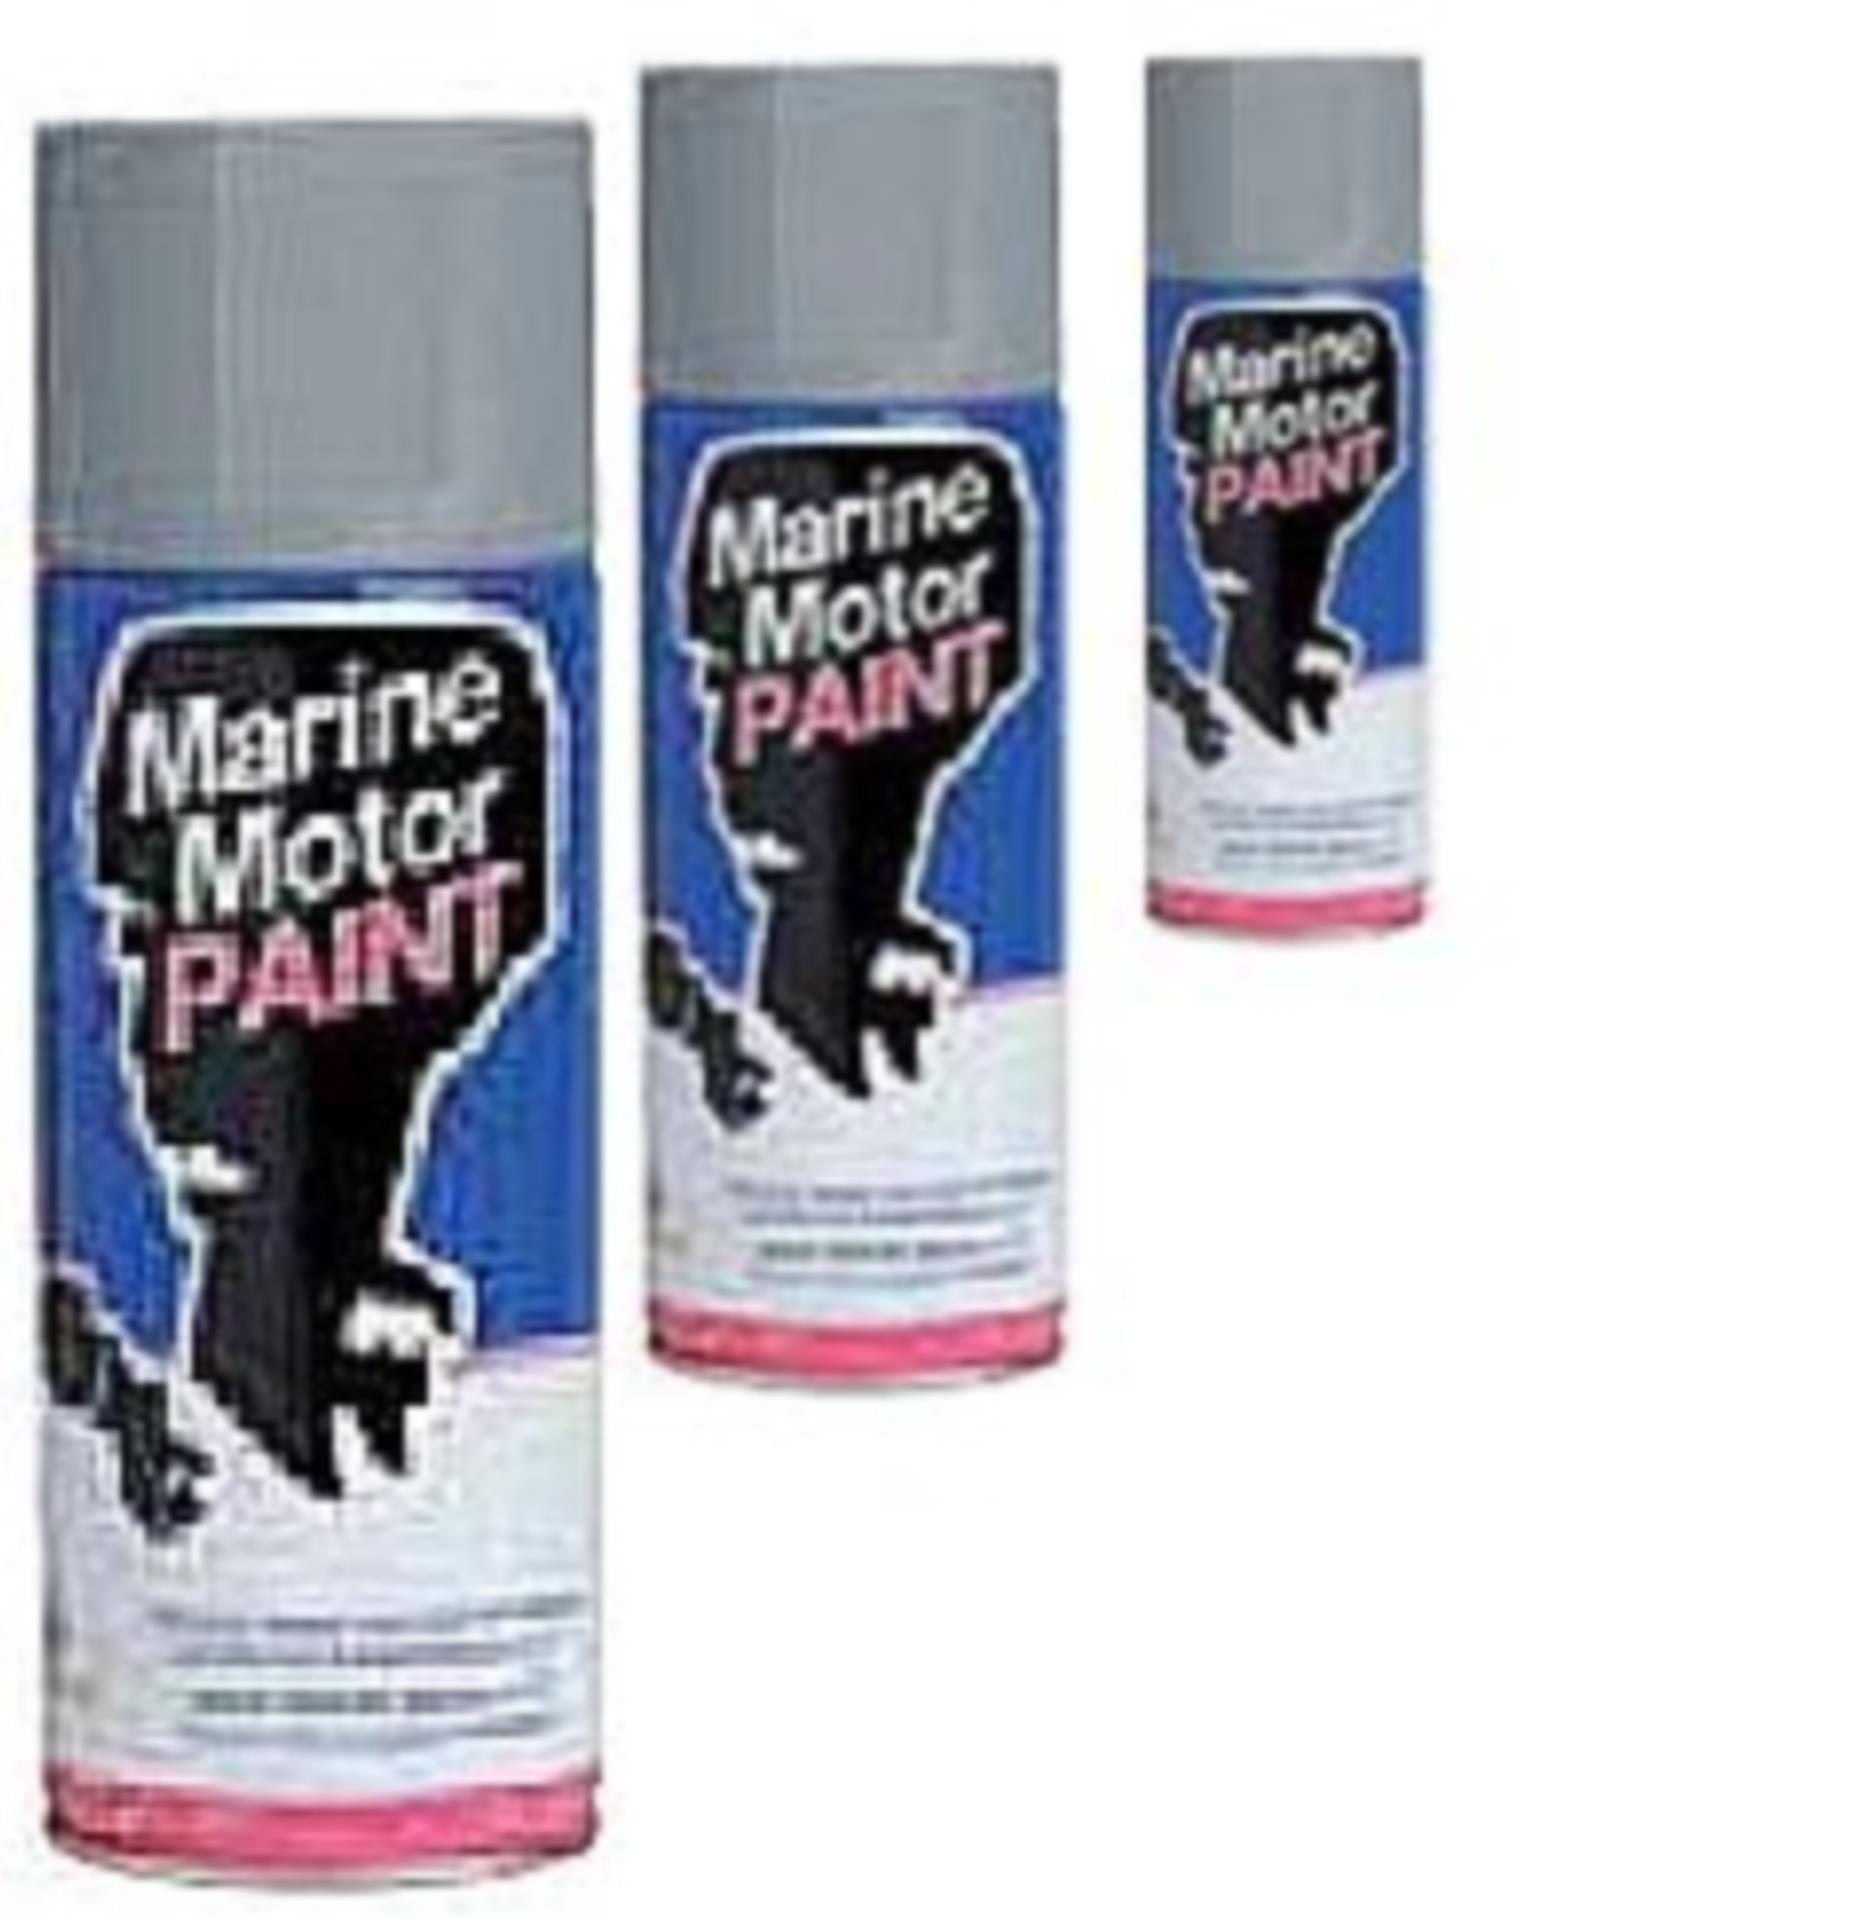 Acryl Spray für OMC weiß Saildrive 77 - 85, 400 ml